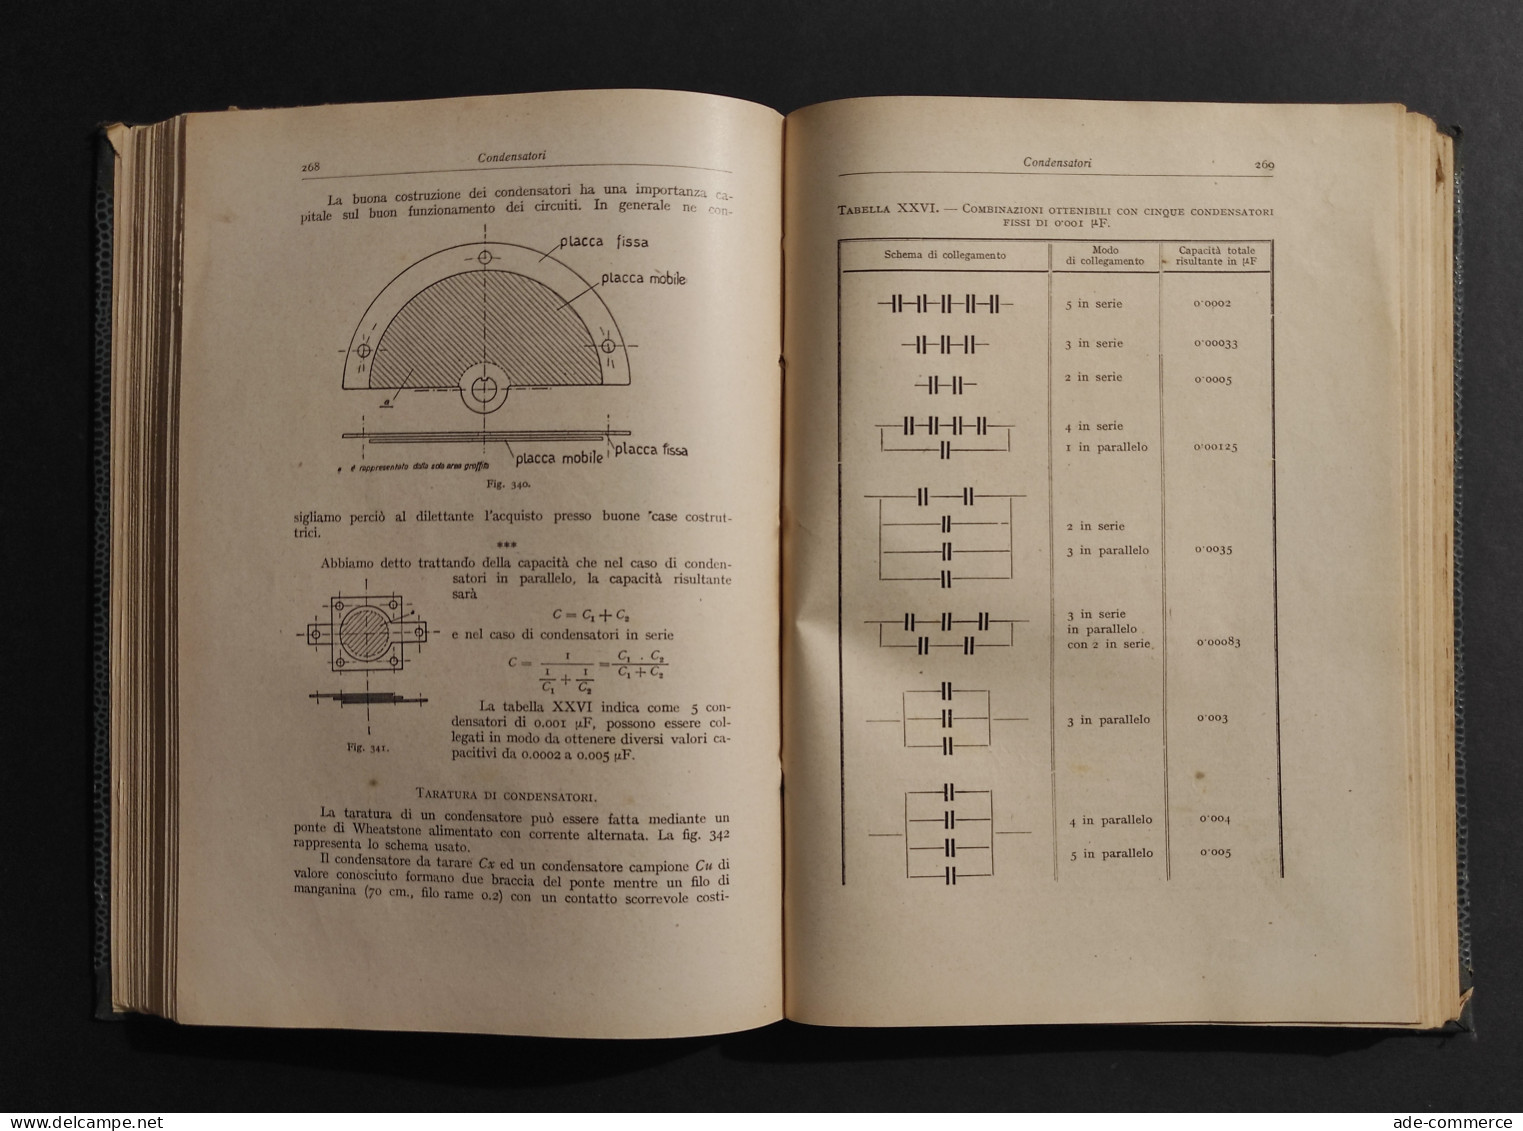 Radio Telegrafica Telefonica - E. Montù - Ed. Hoepli - 1929 - Mathematik Und Physik